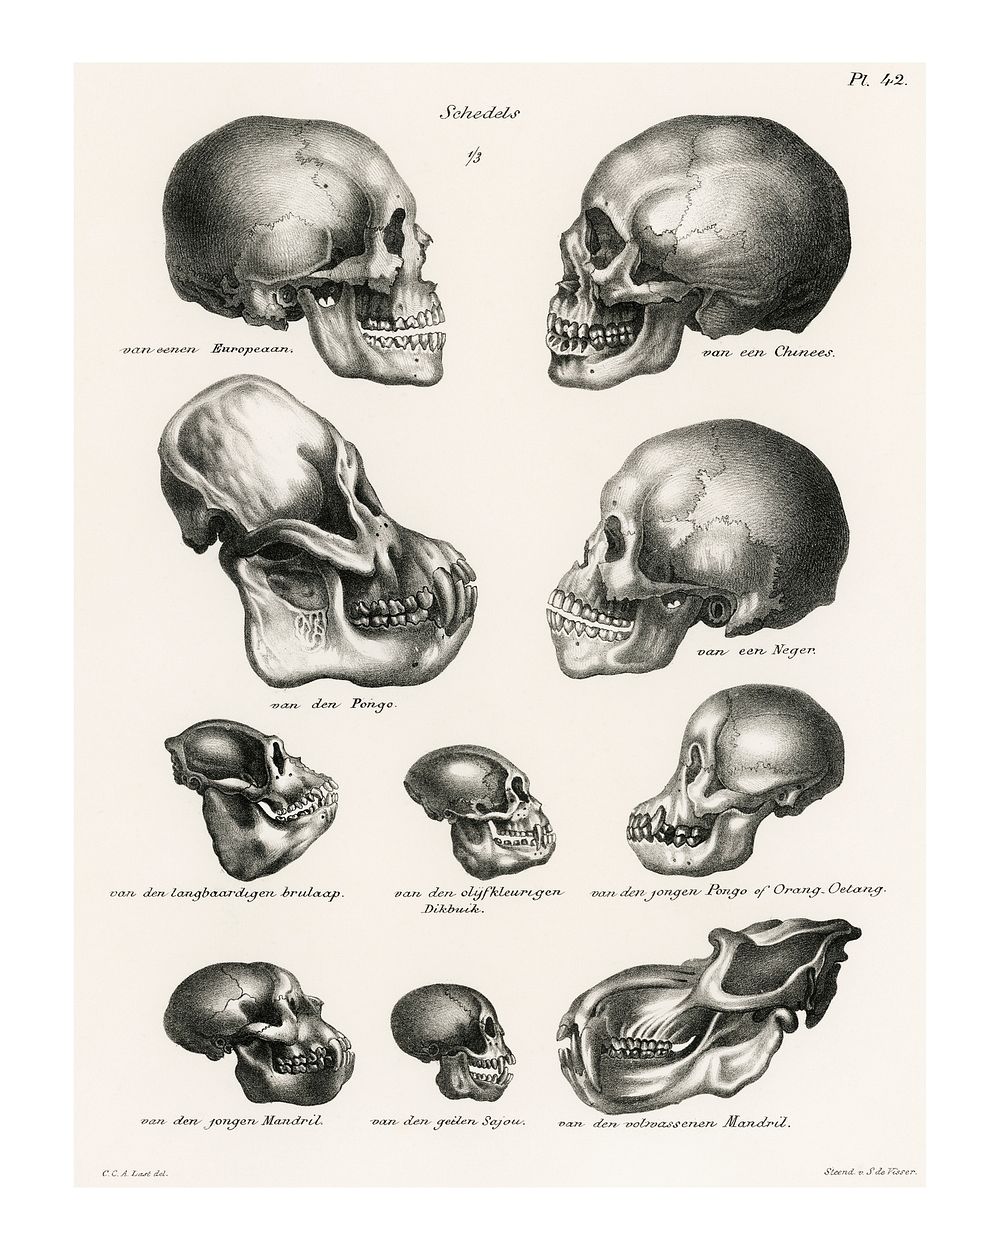 Human monkey and ape skulls vintage illustration wall art print and poster design remix from original artwork.